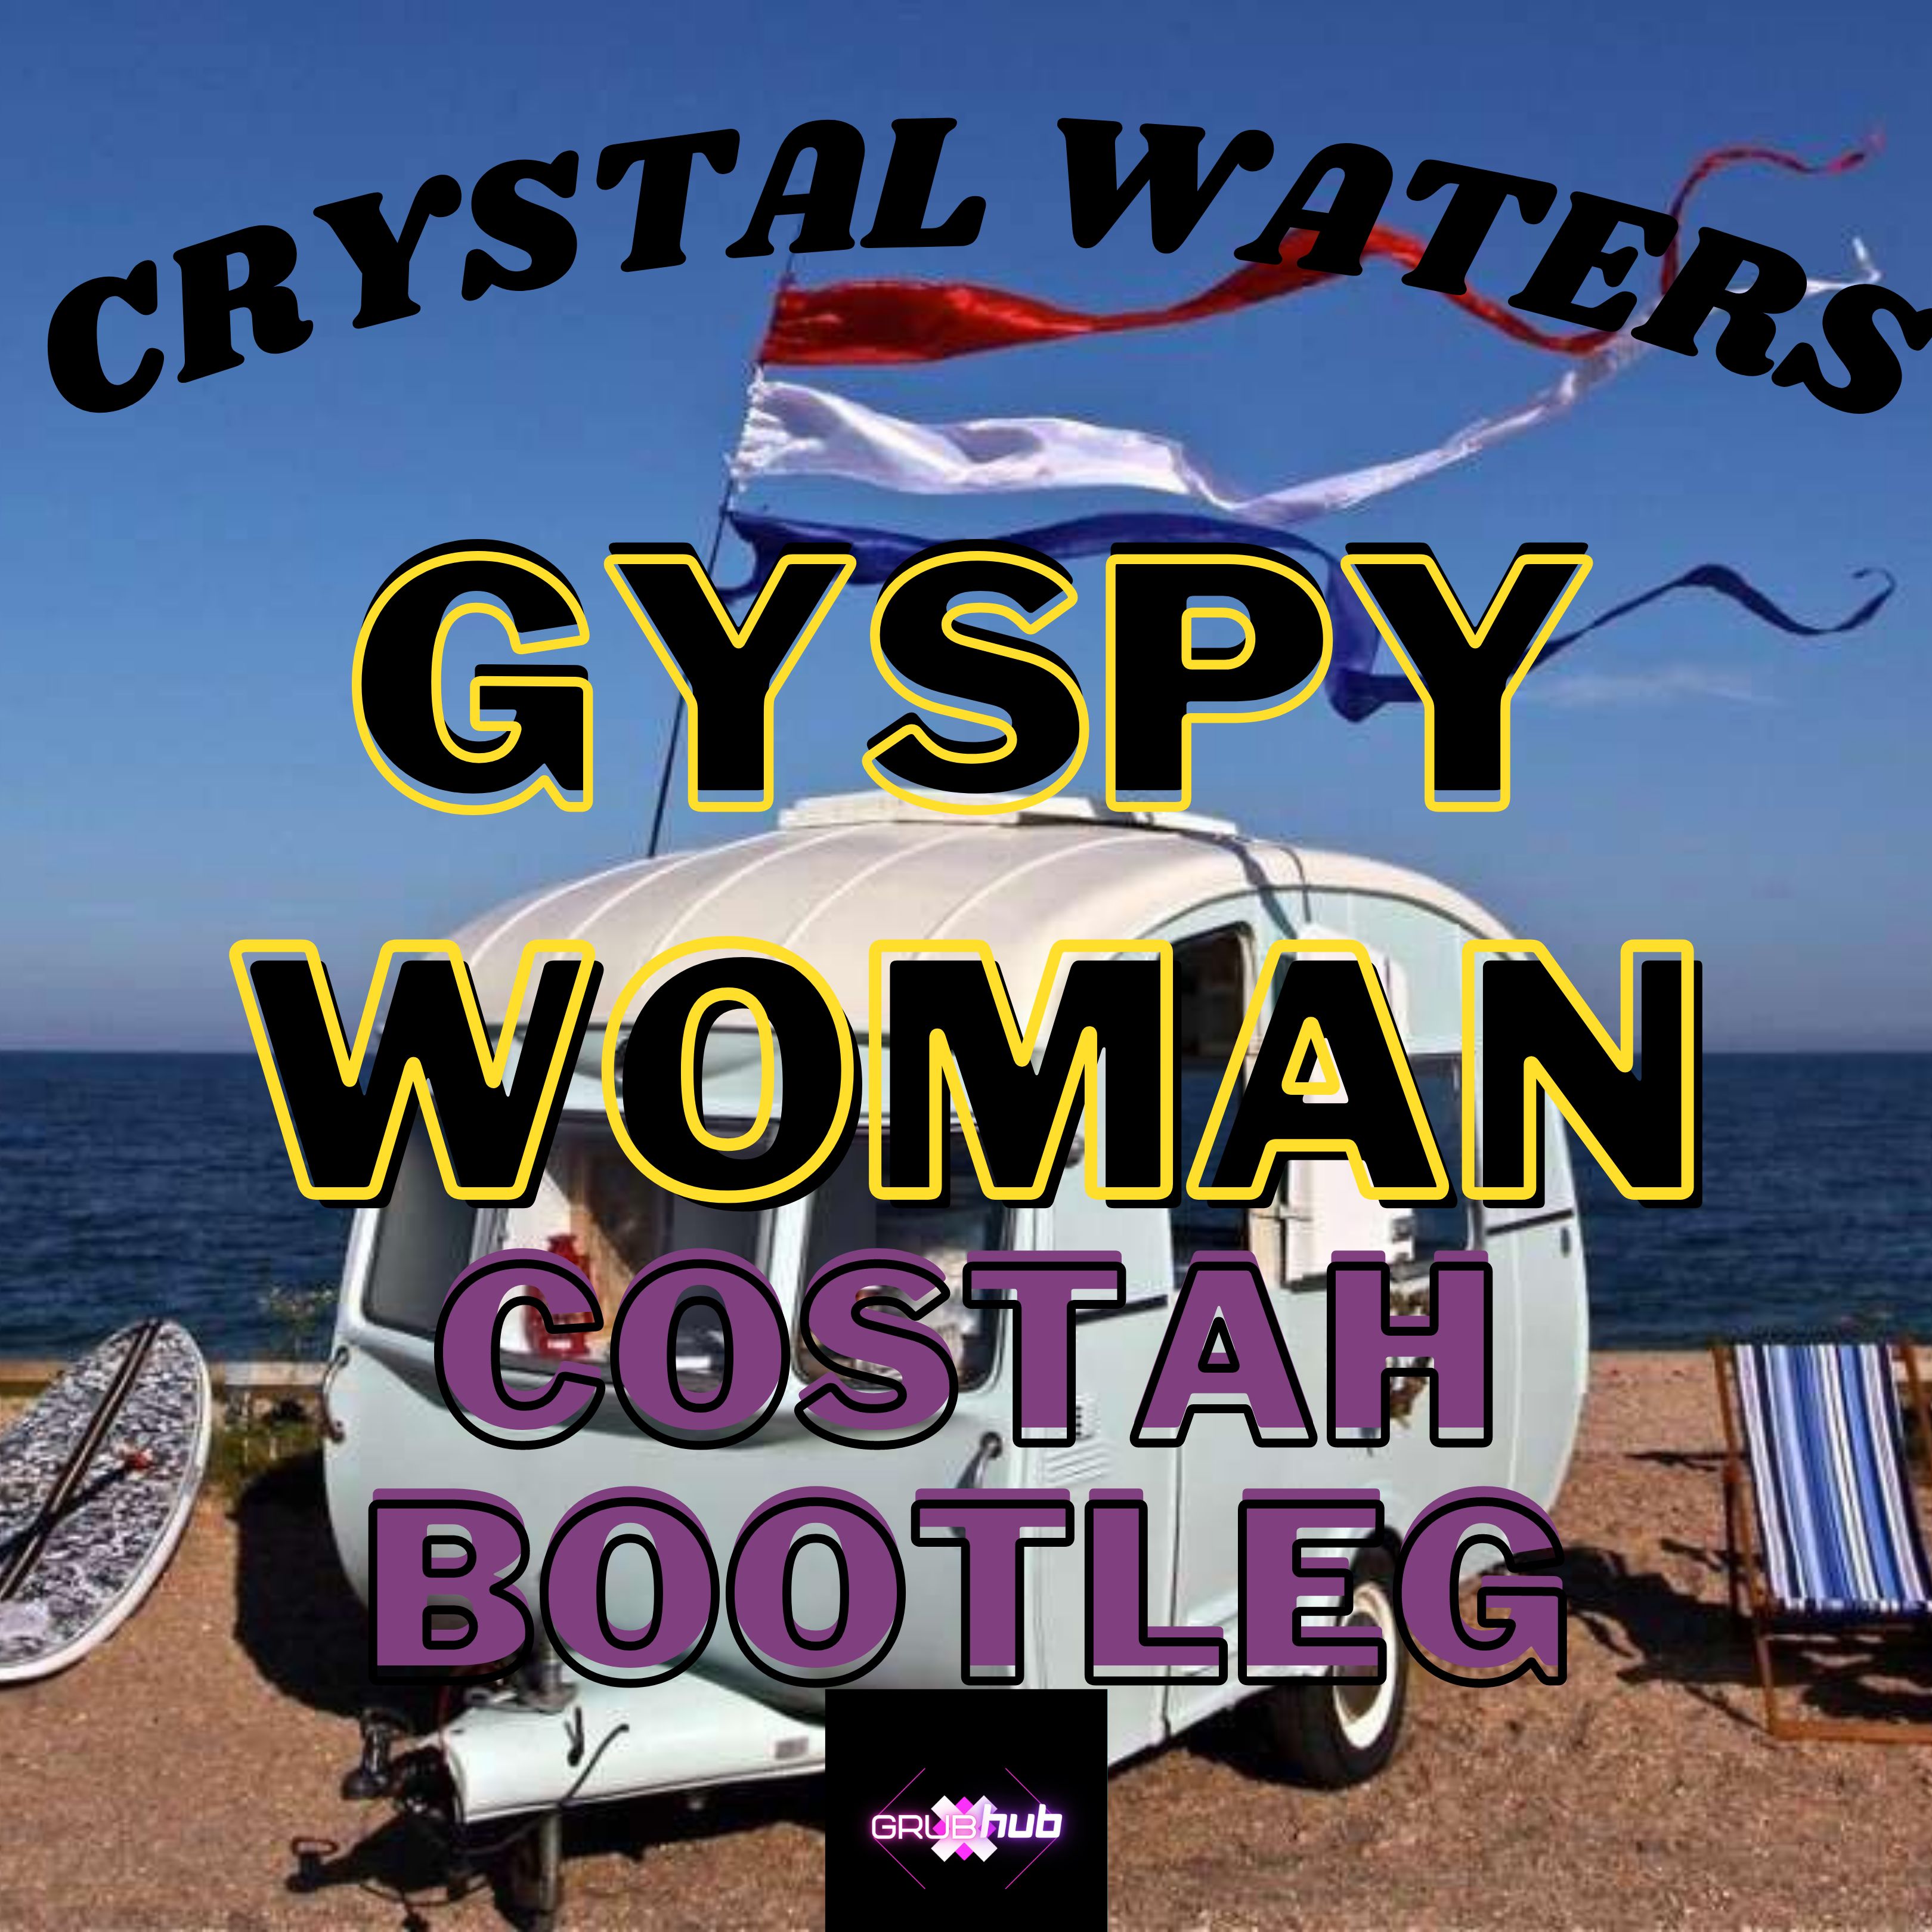 Preuzimanje datoteka Crystal Waters - Gypsy Woman (Costah Bootleg) FREE DOWNLOAD